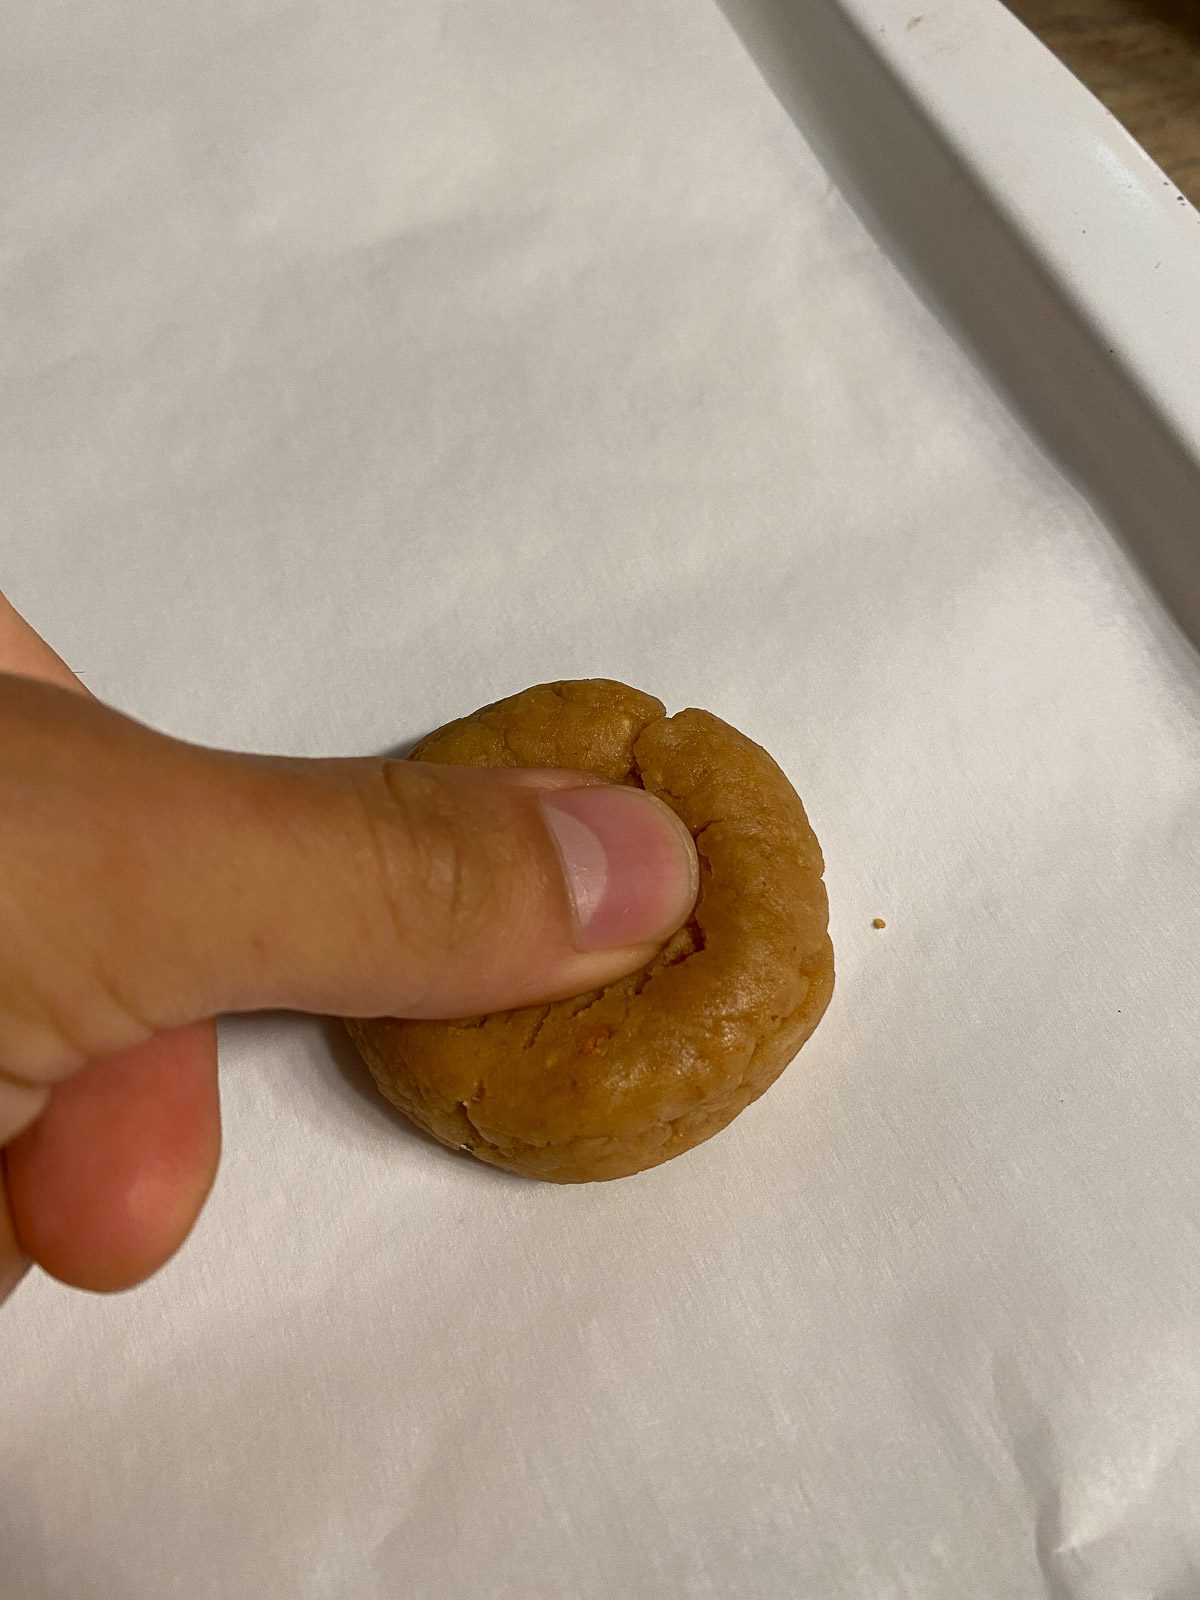 process of creating thumbprint indent into dough on a baking sheet